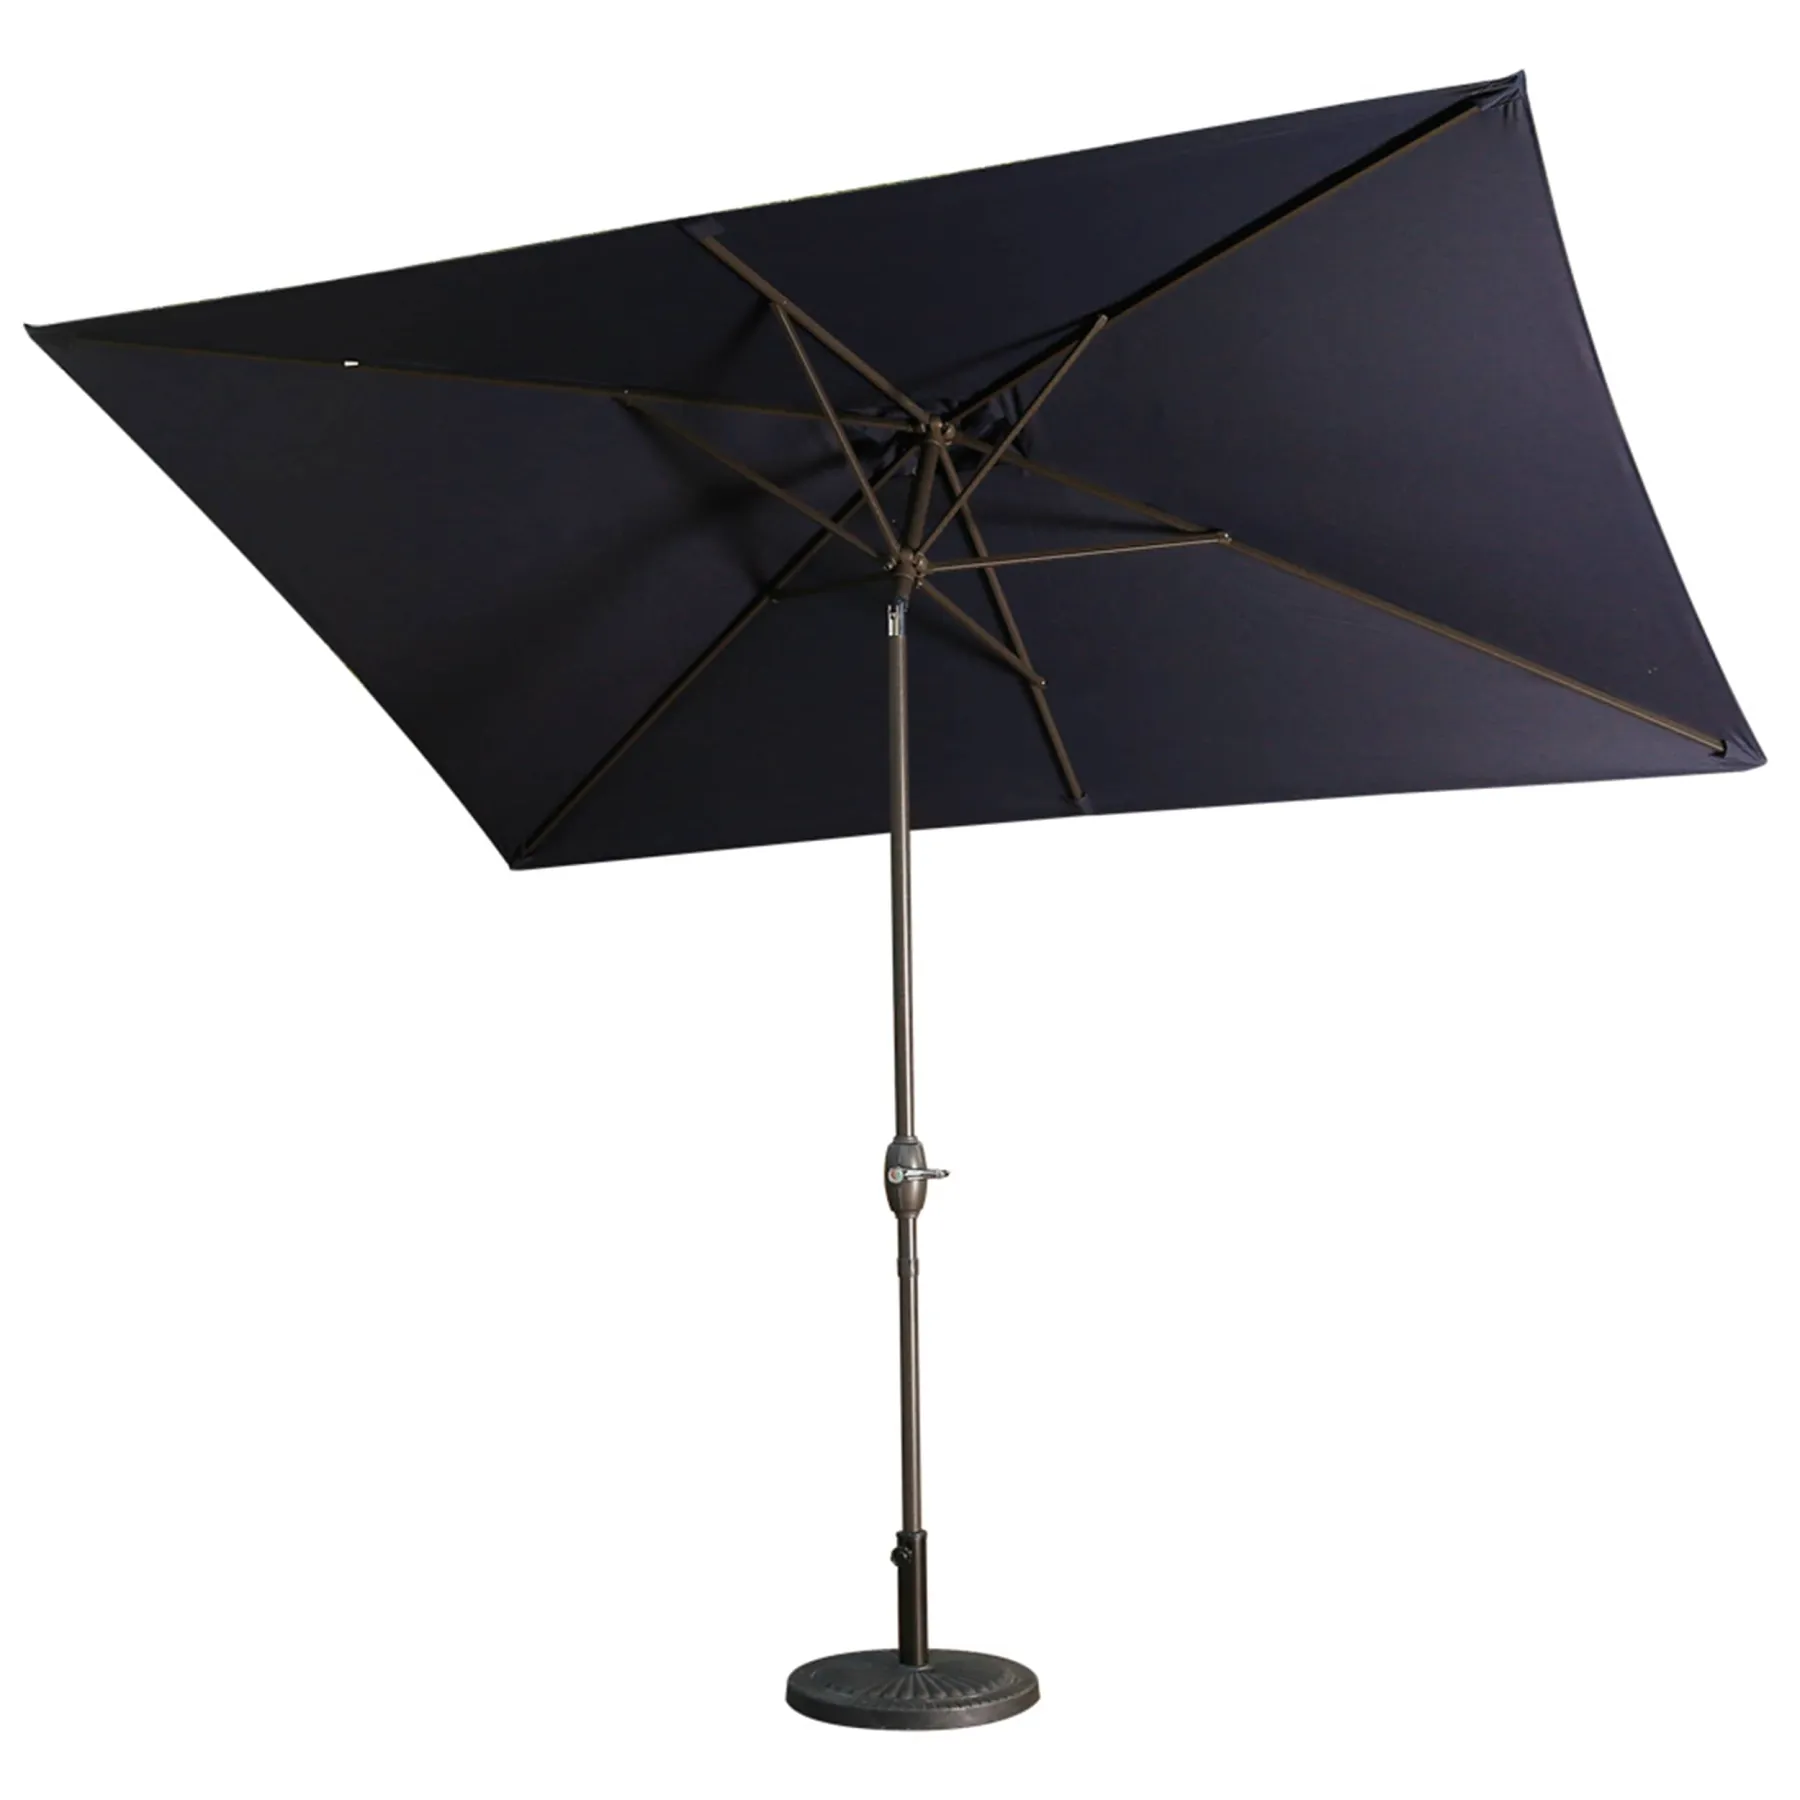 Casainc 10 ft. Aluminum Rectanglar Market Patio Umbrella in Navy Blue